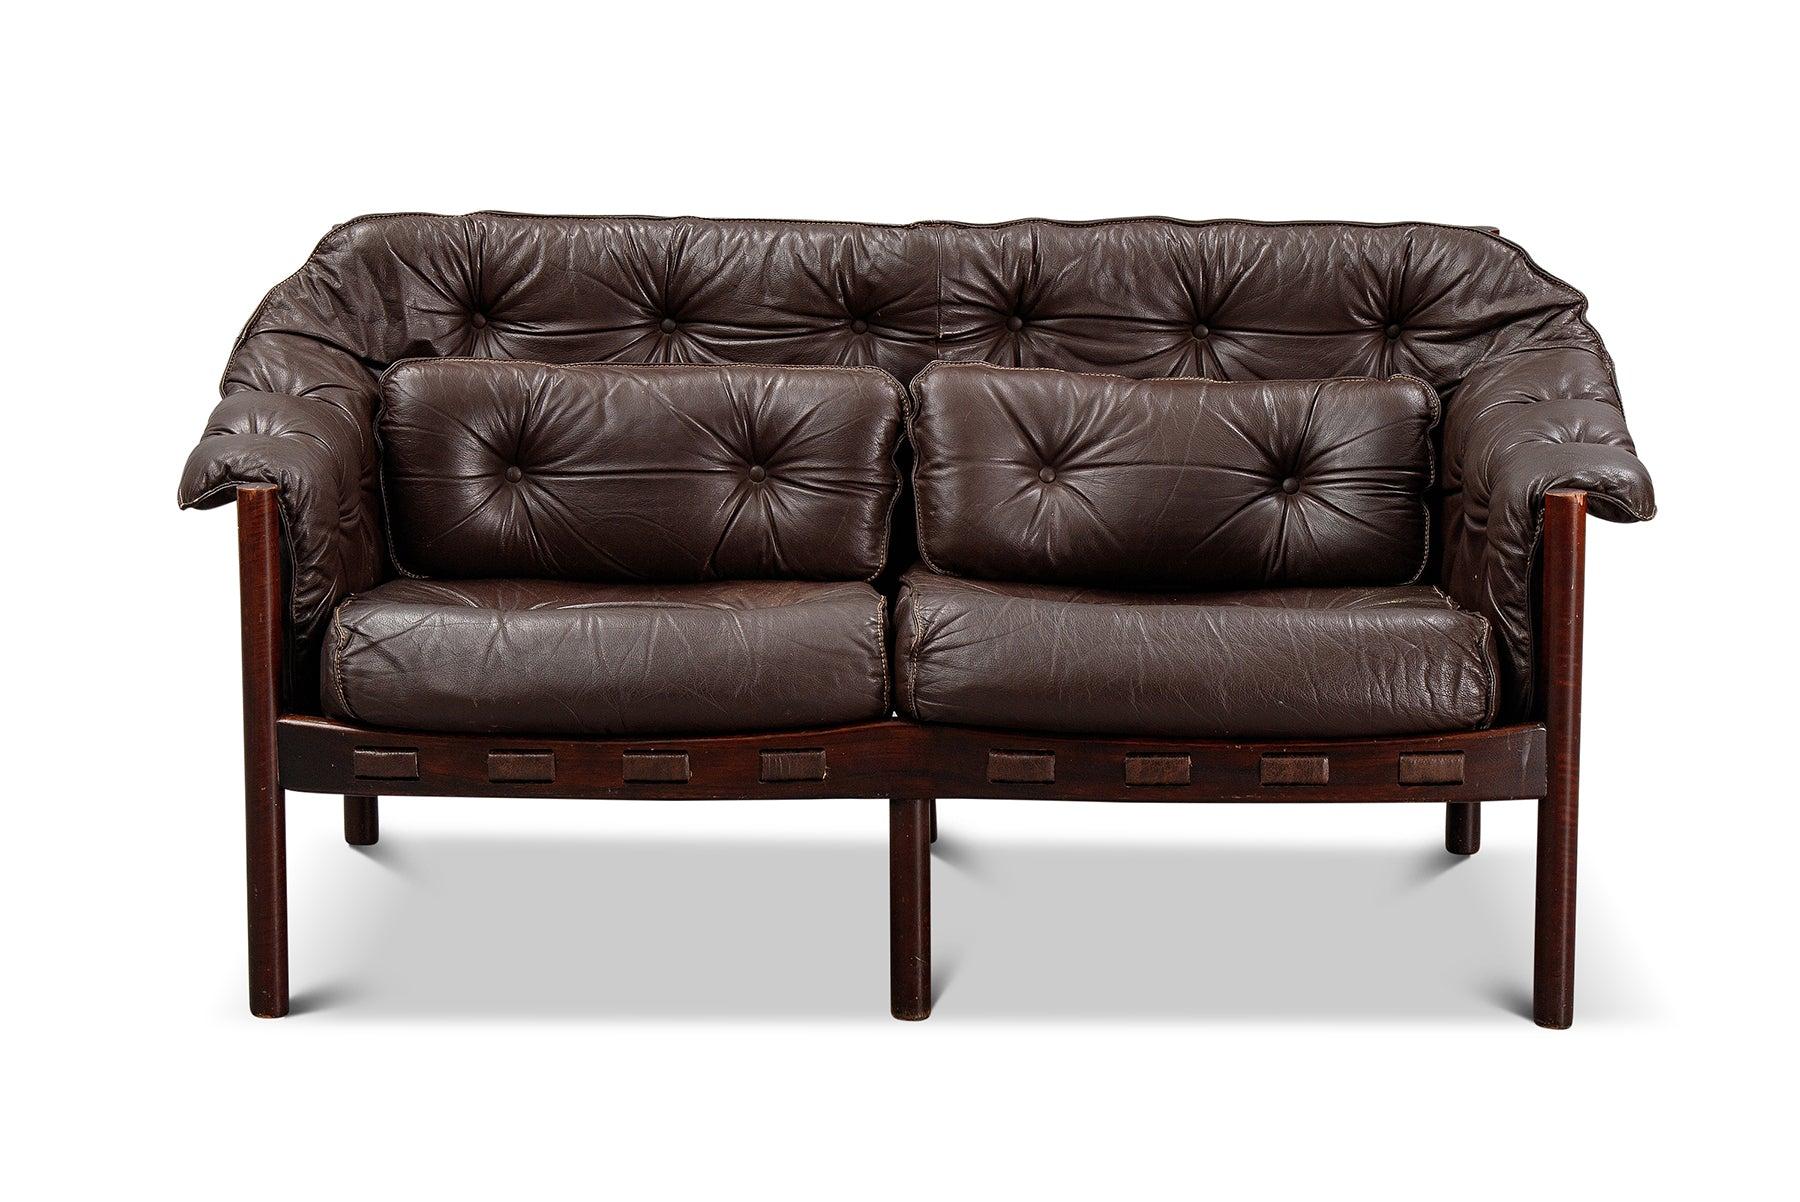 Mid-Century Modern Sven Ellekær Loveseat in Dark Brown Leather #2 For Sale